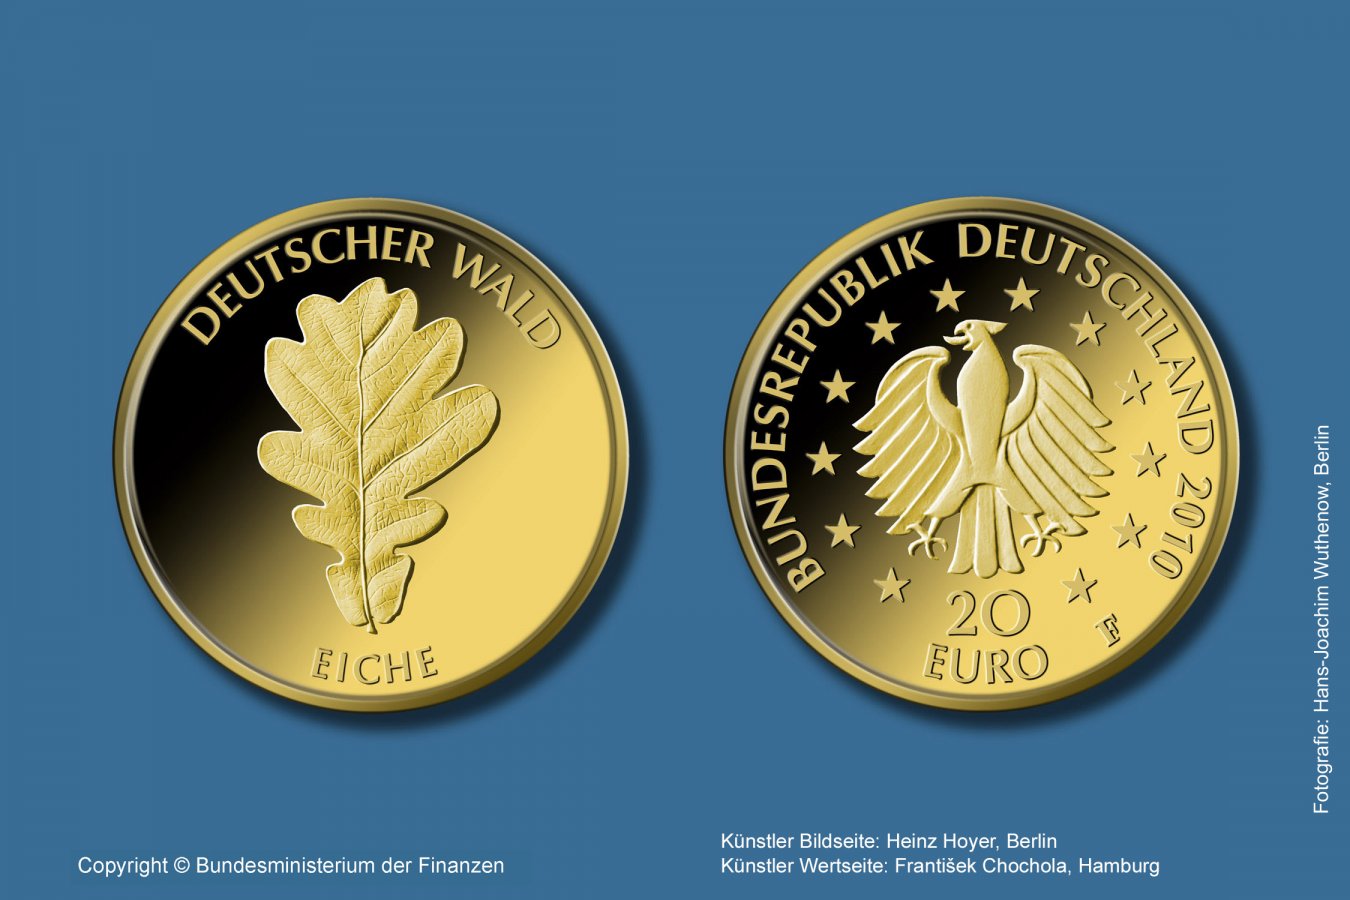 Download 20 euro gold coin 2010 "Eiche" 